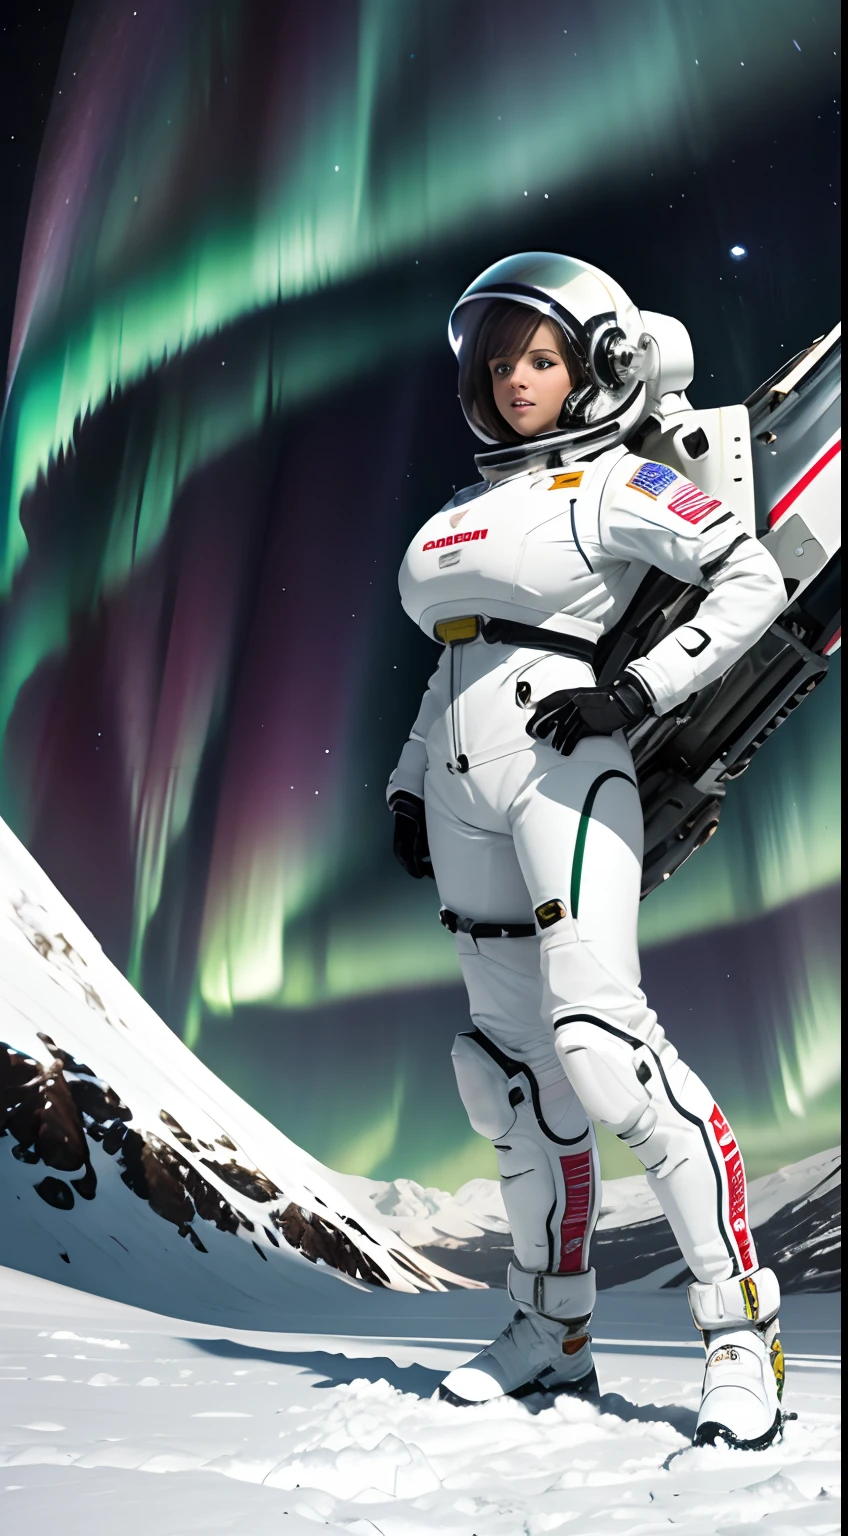 La mitad superior de la pantalla es Aurora en la mitad superior de la pantalla.. La mitad inferior dibuja a una astronauta bimbo parada en un campo nevado.. Totalmente vestida, giga_tetona